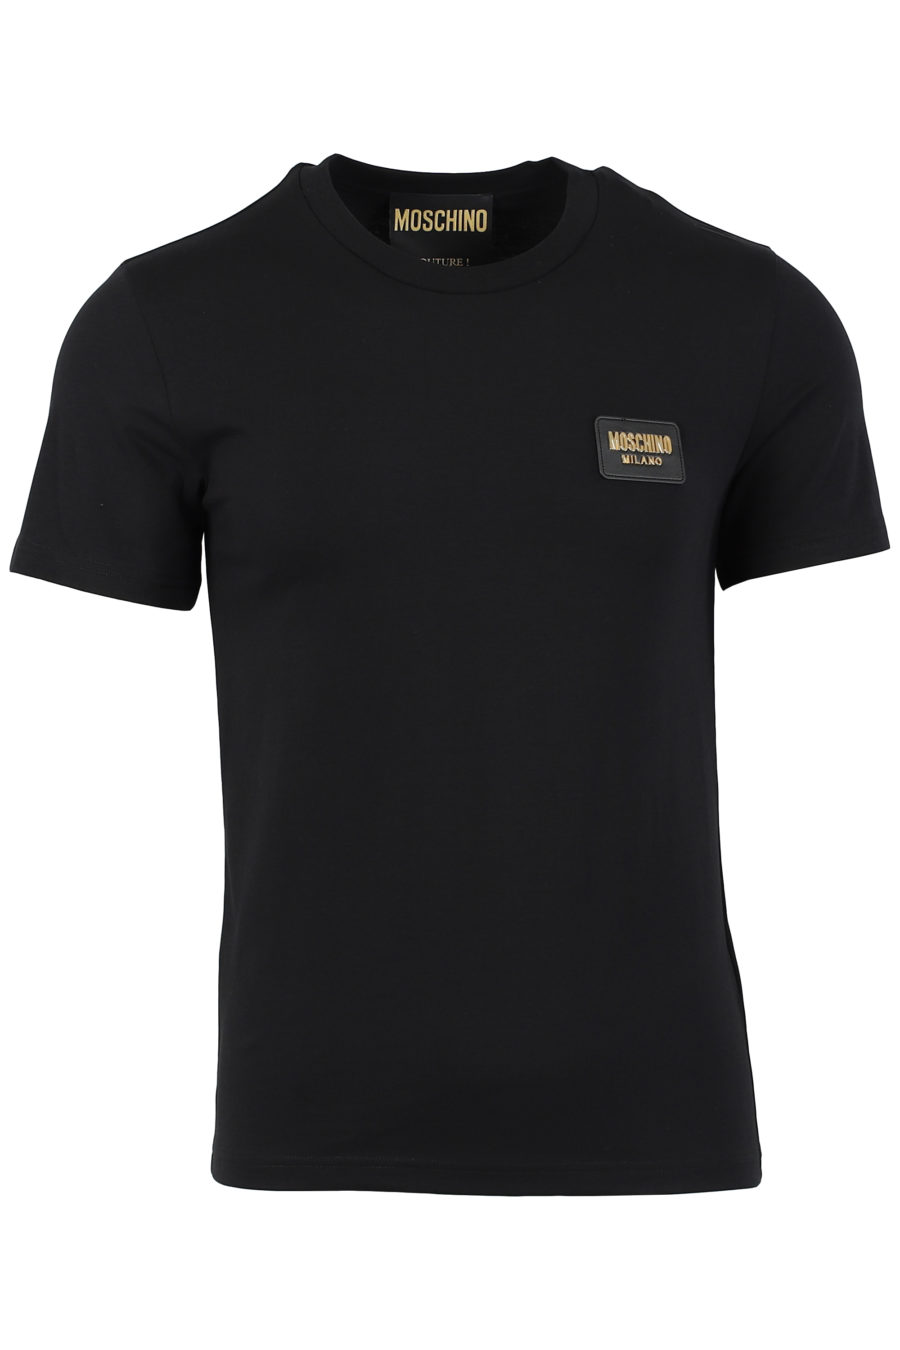 Camiseta negra logo en color oro - IMG 0940